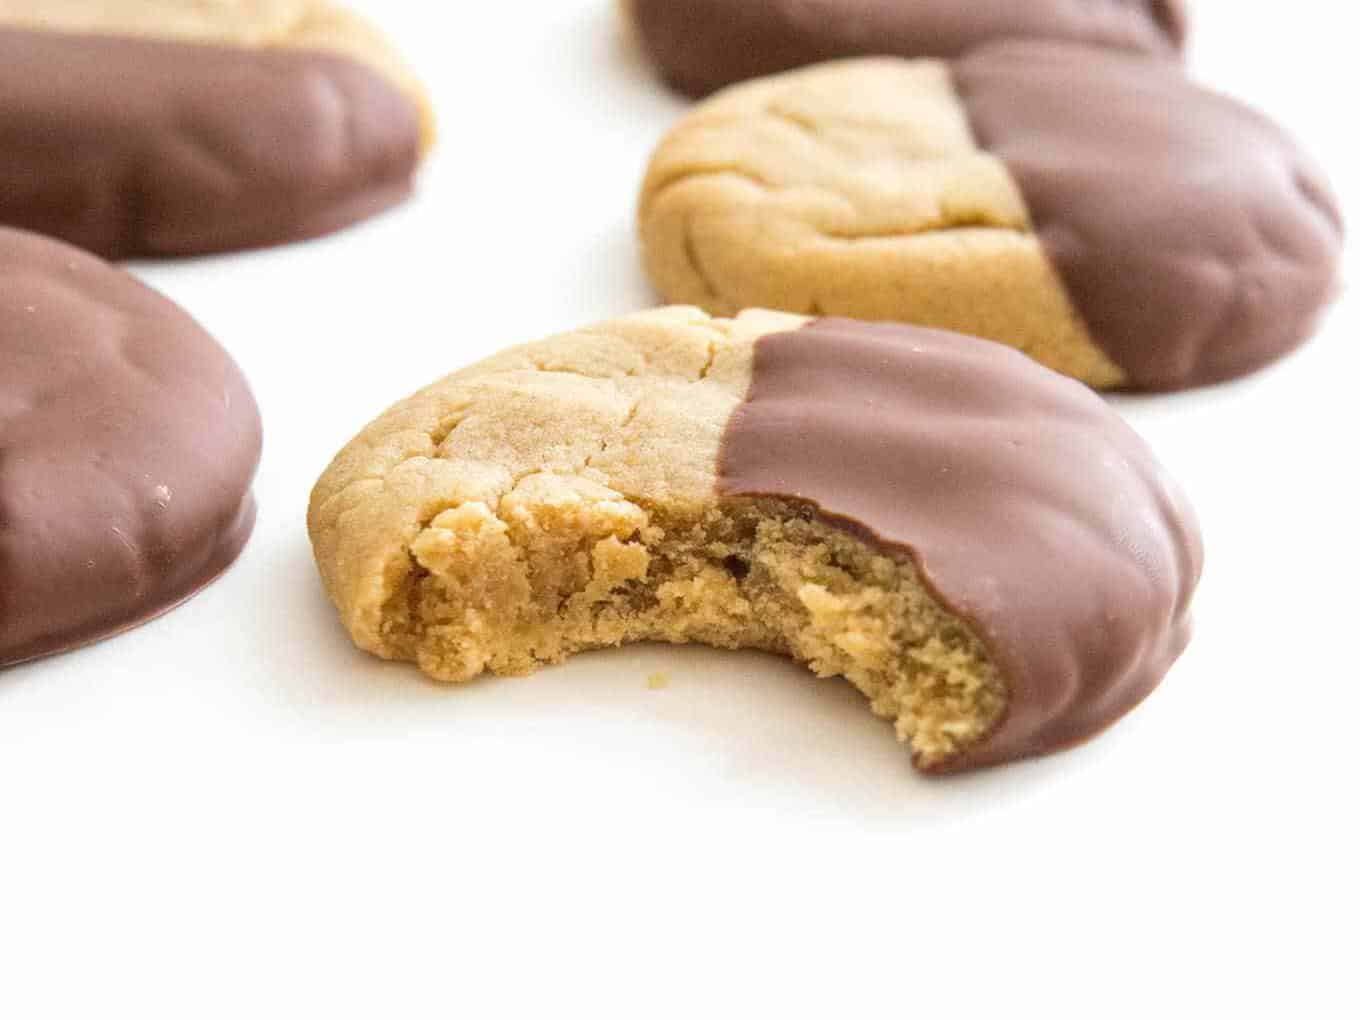 Inside of peanut butter cookie bite.